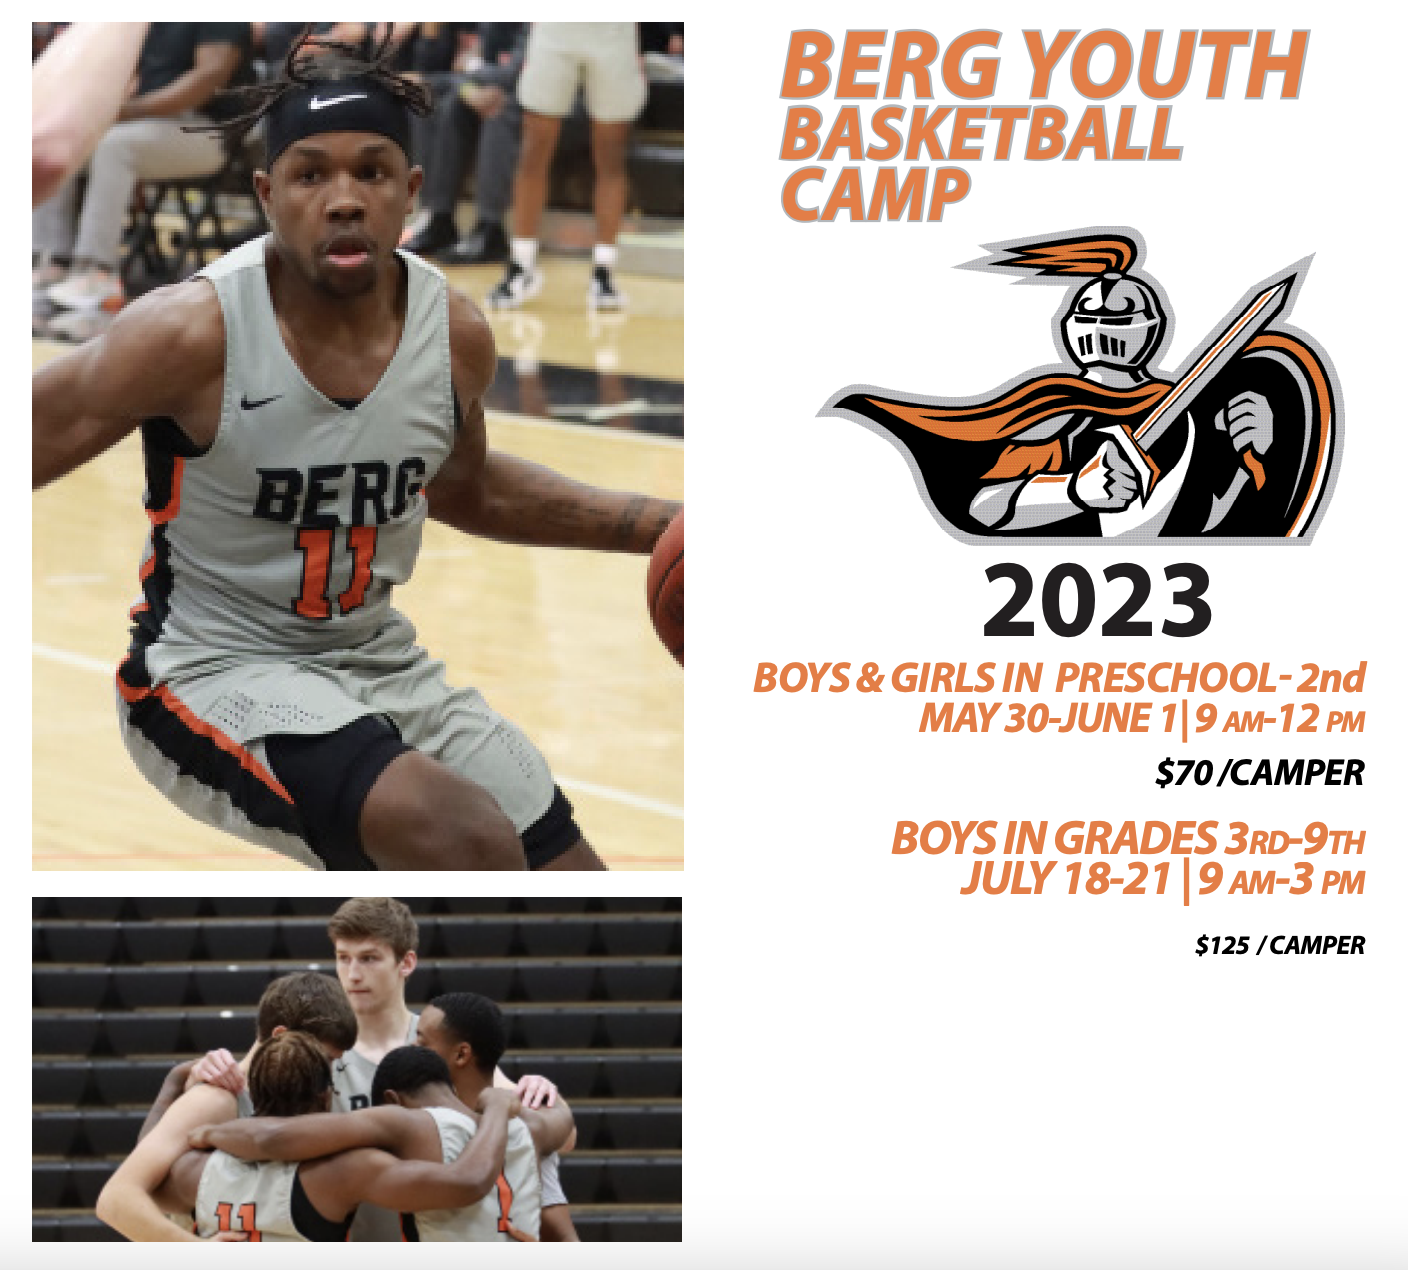 Berg Youth Basketball Camp